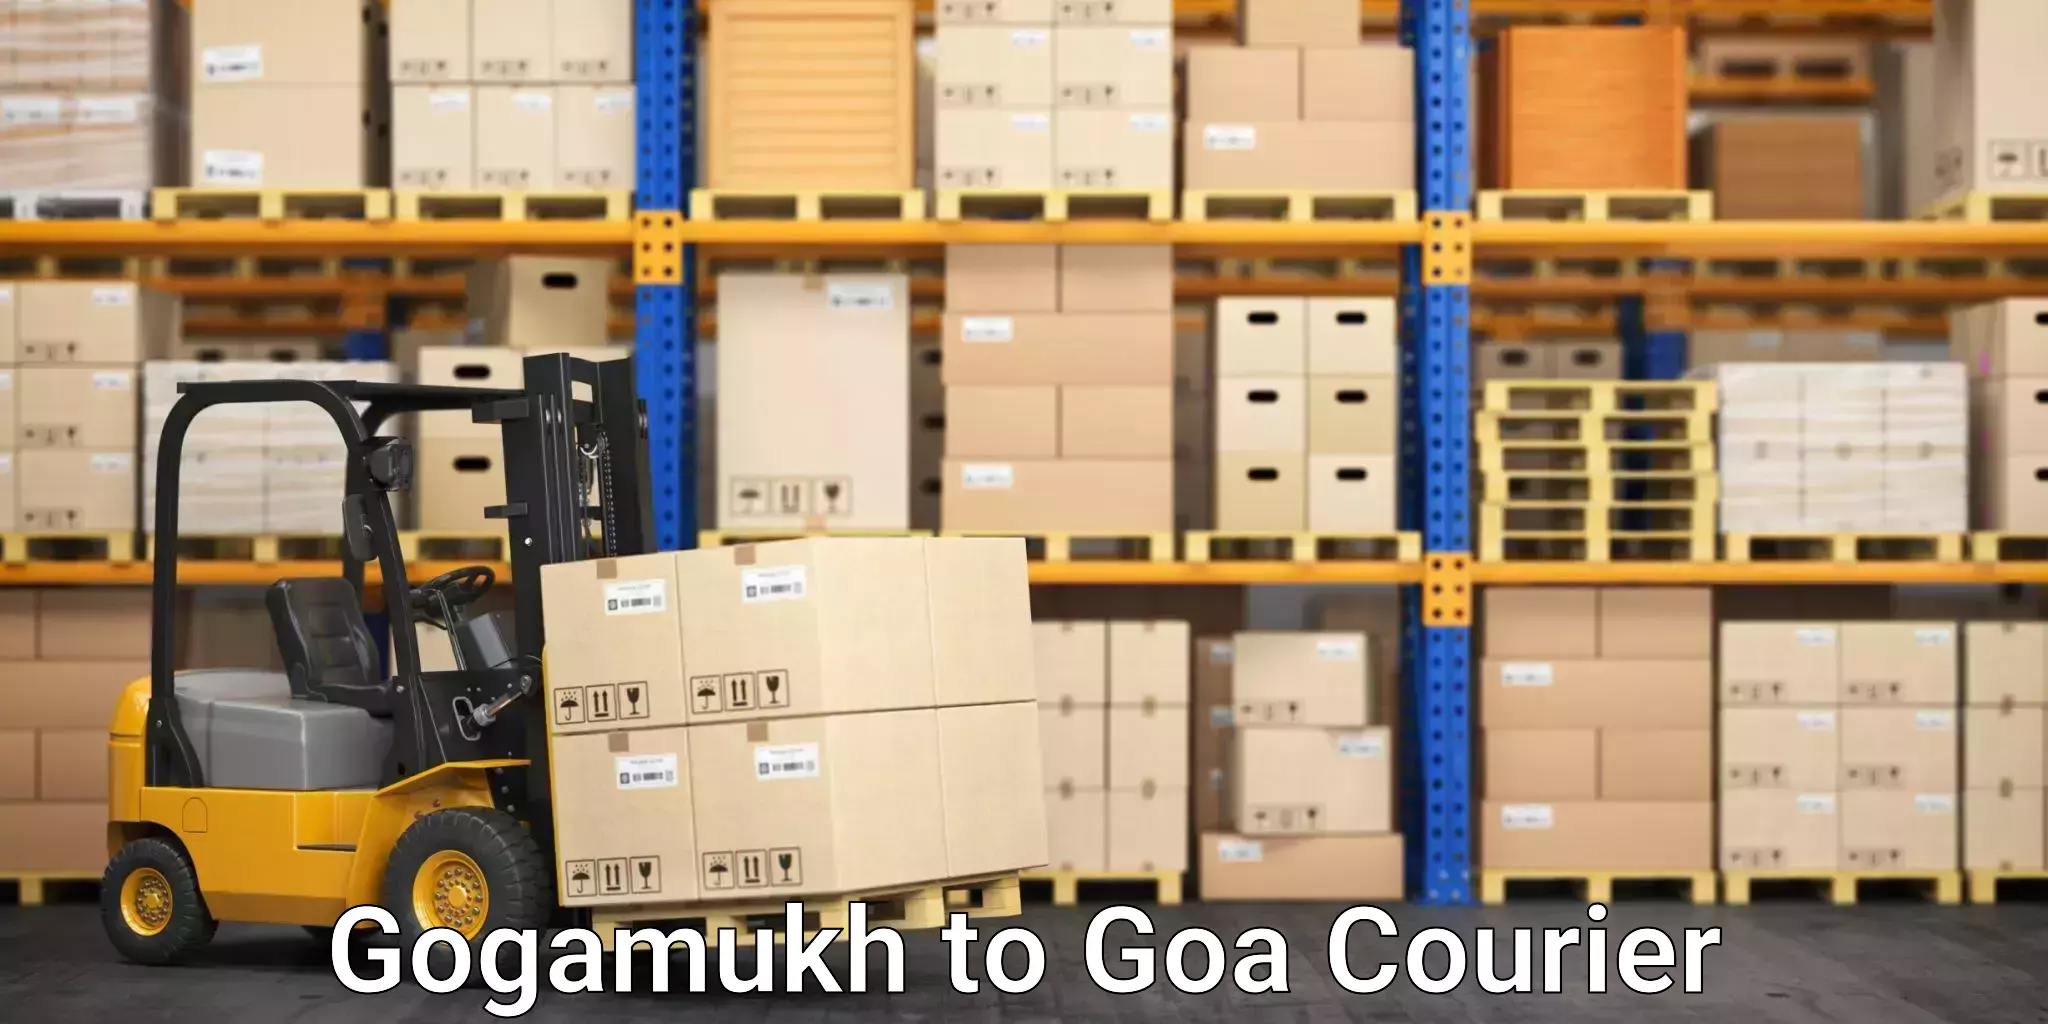 Courier service comparison Gogamukh to South Goa